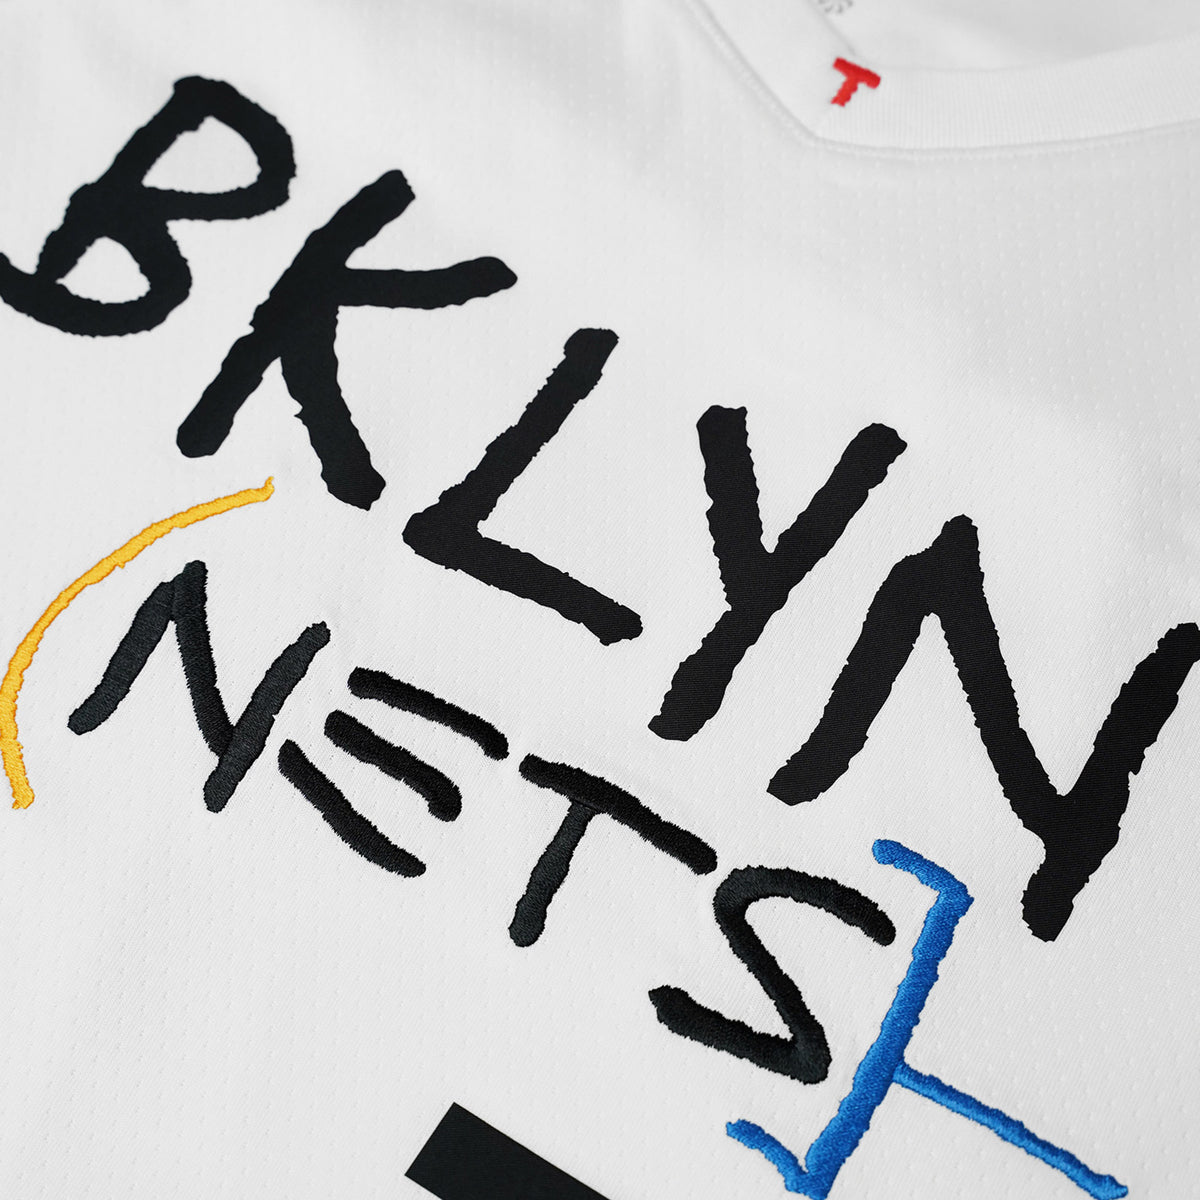 Unisex Jordan Brand Kevin Durant Black Brooklyn Nets Swingman Jersey - Statement Edition Size: Large